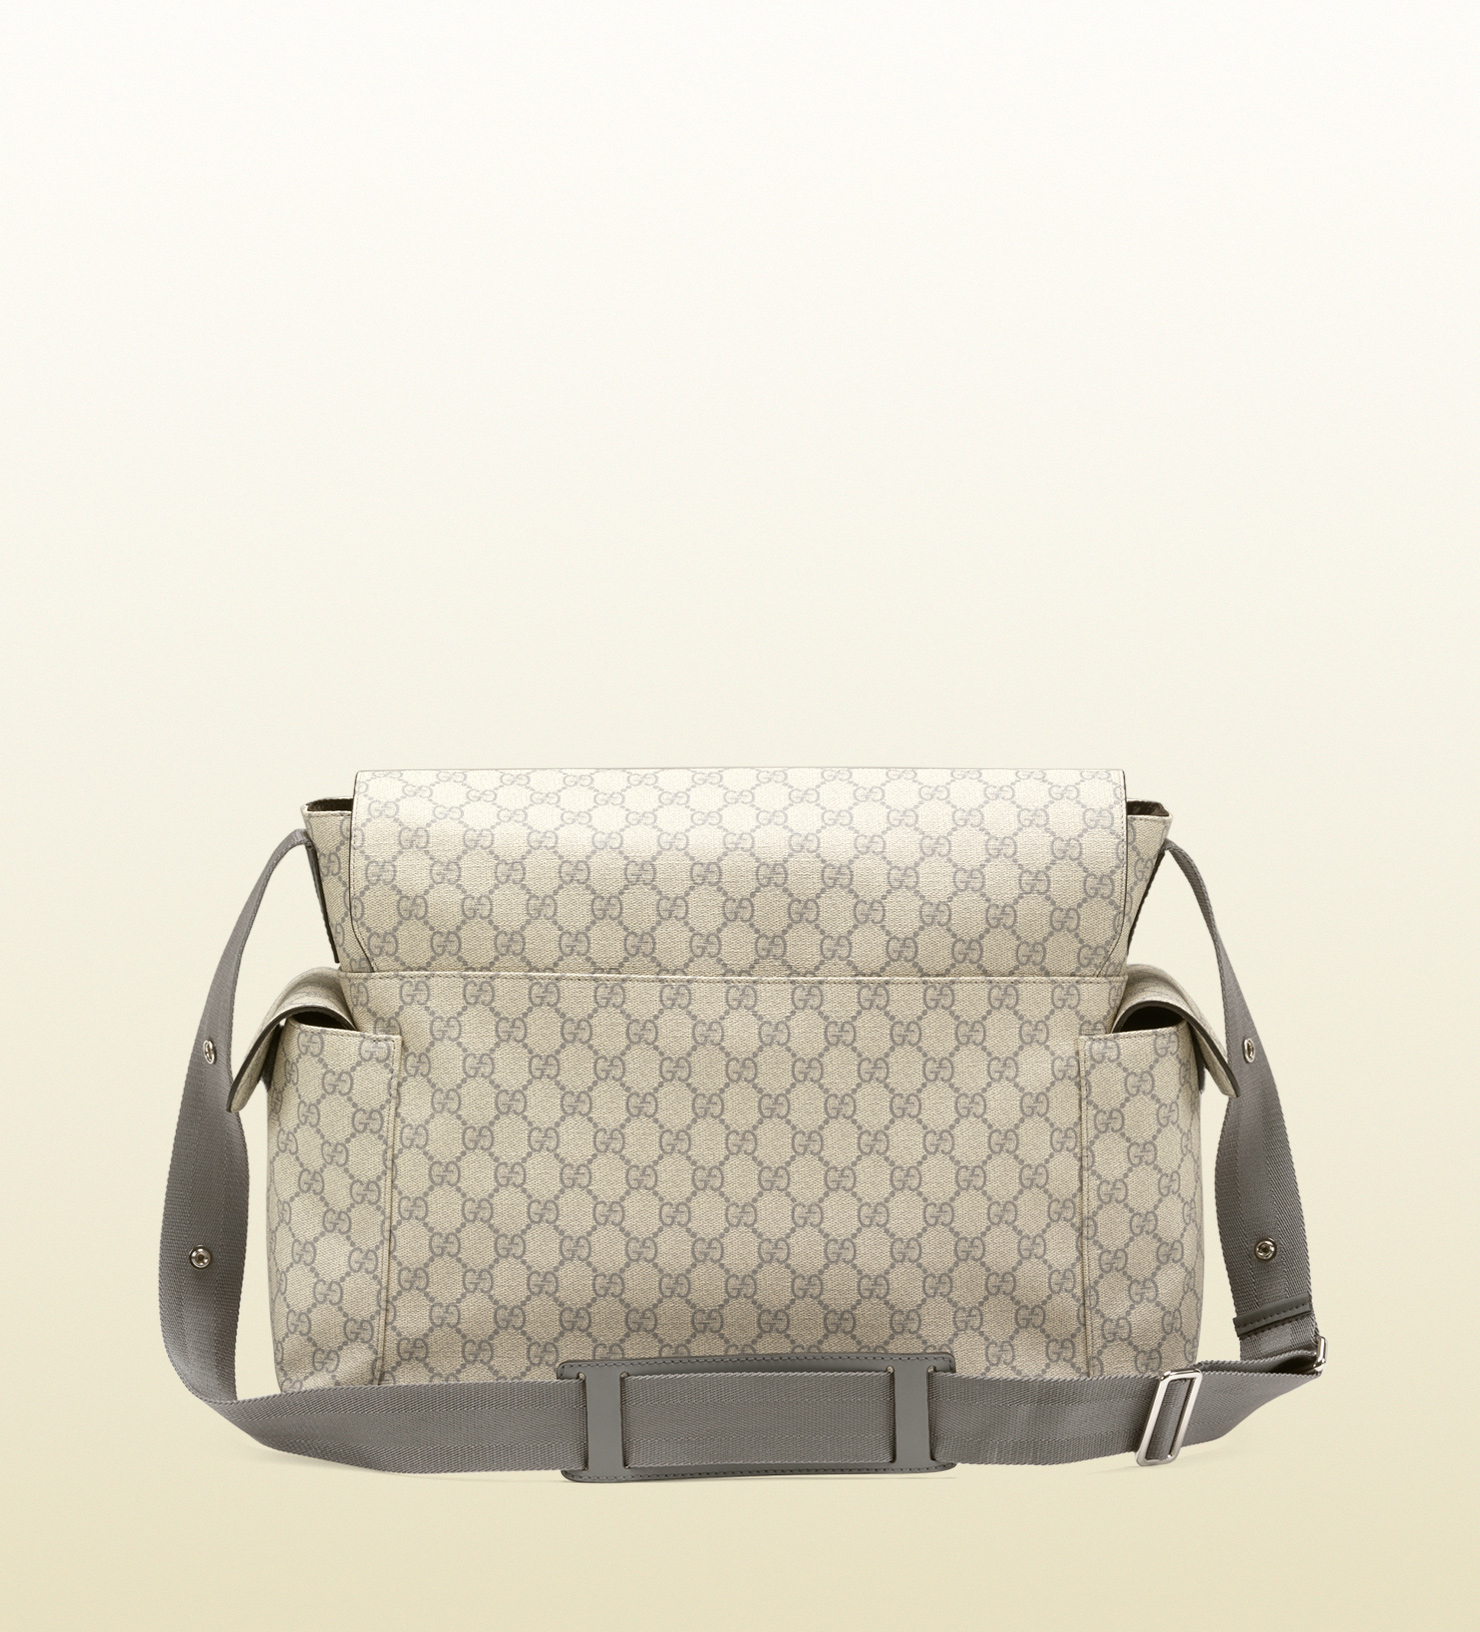 Lyst - Gucci Gg Supreme Canvas Diaper Bag in Gray for Men